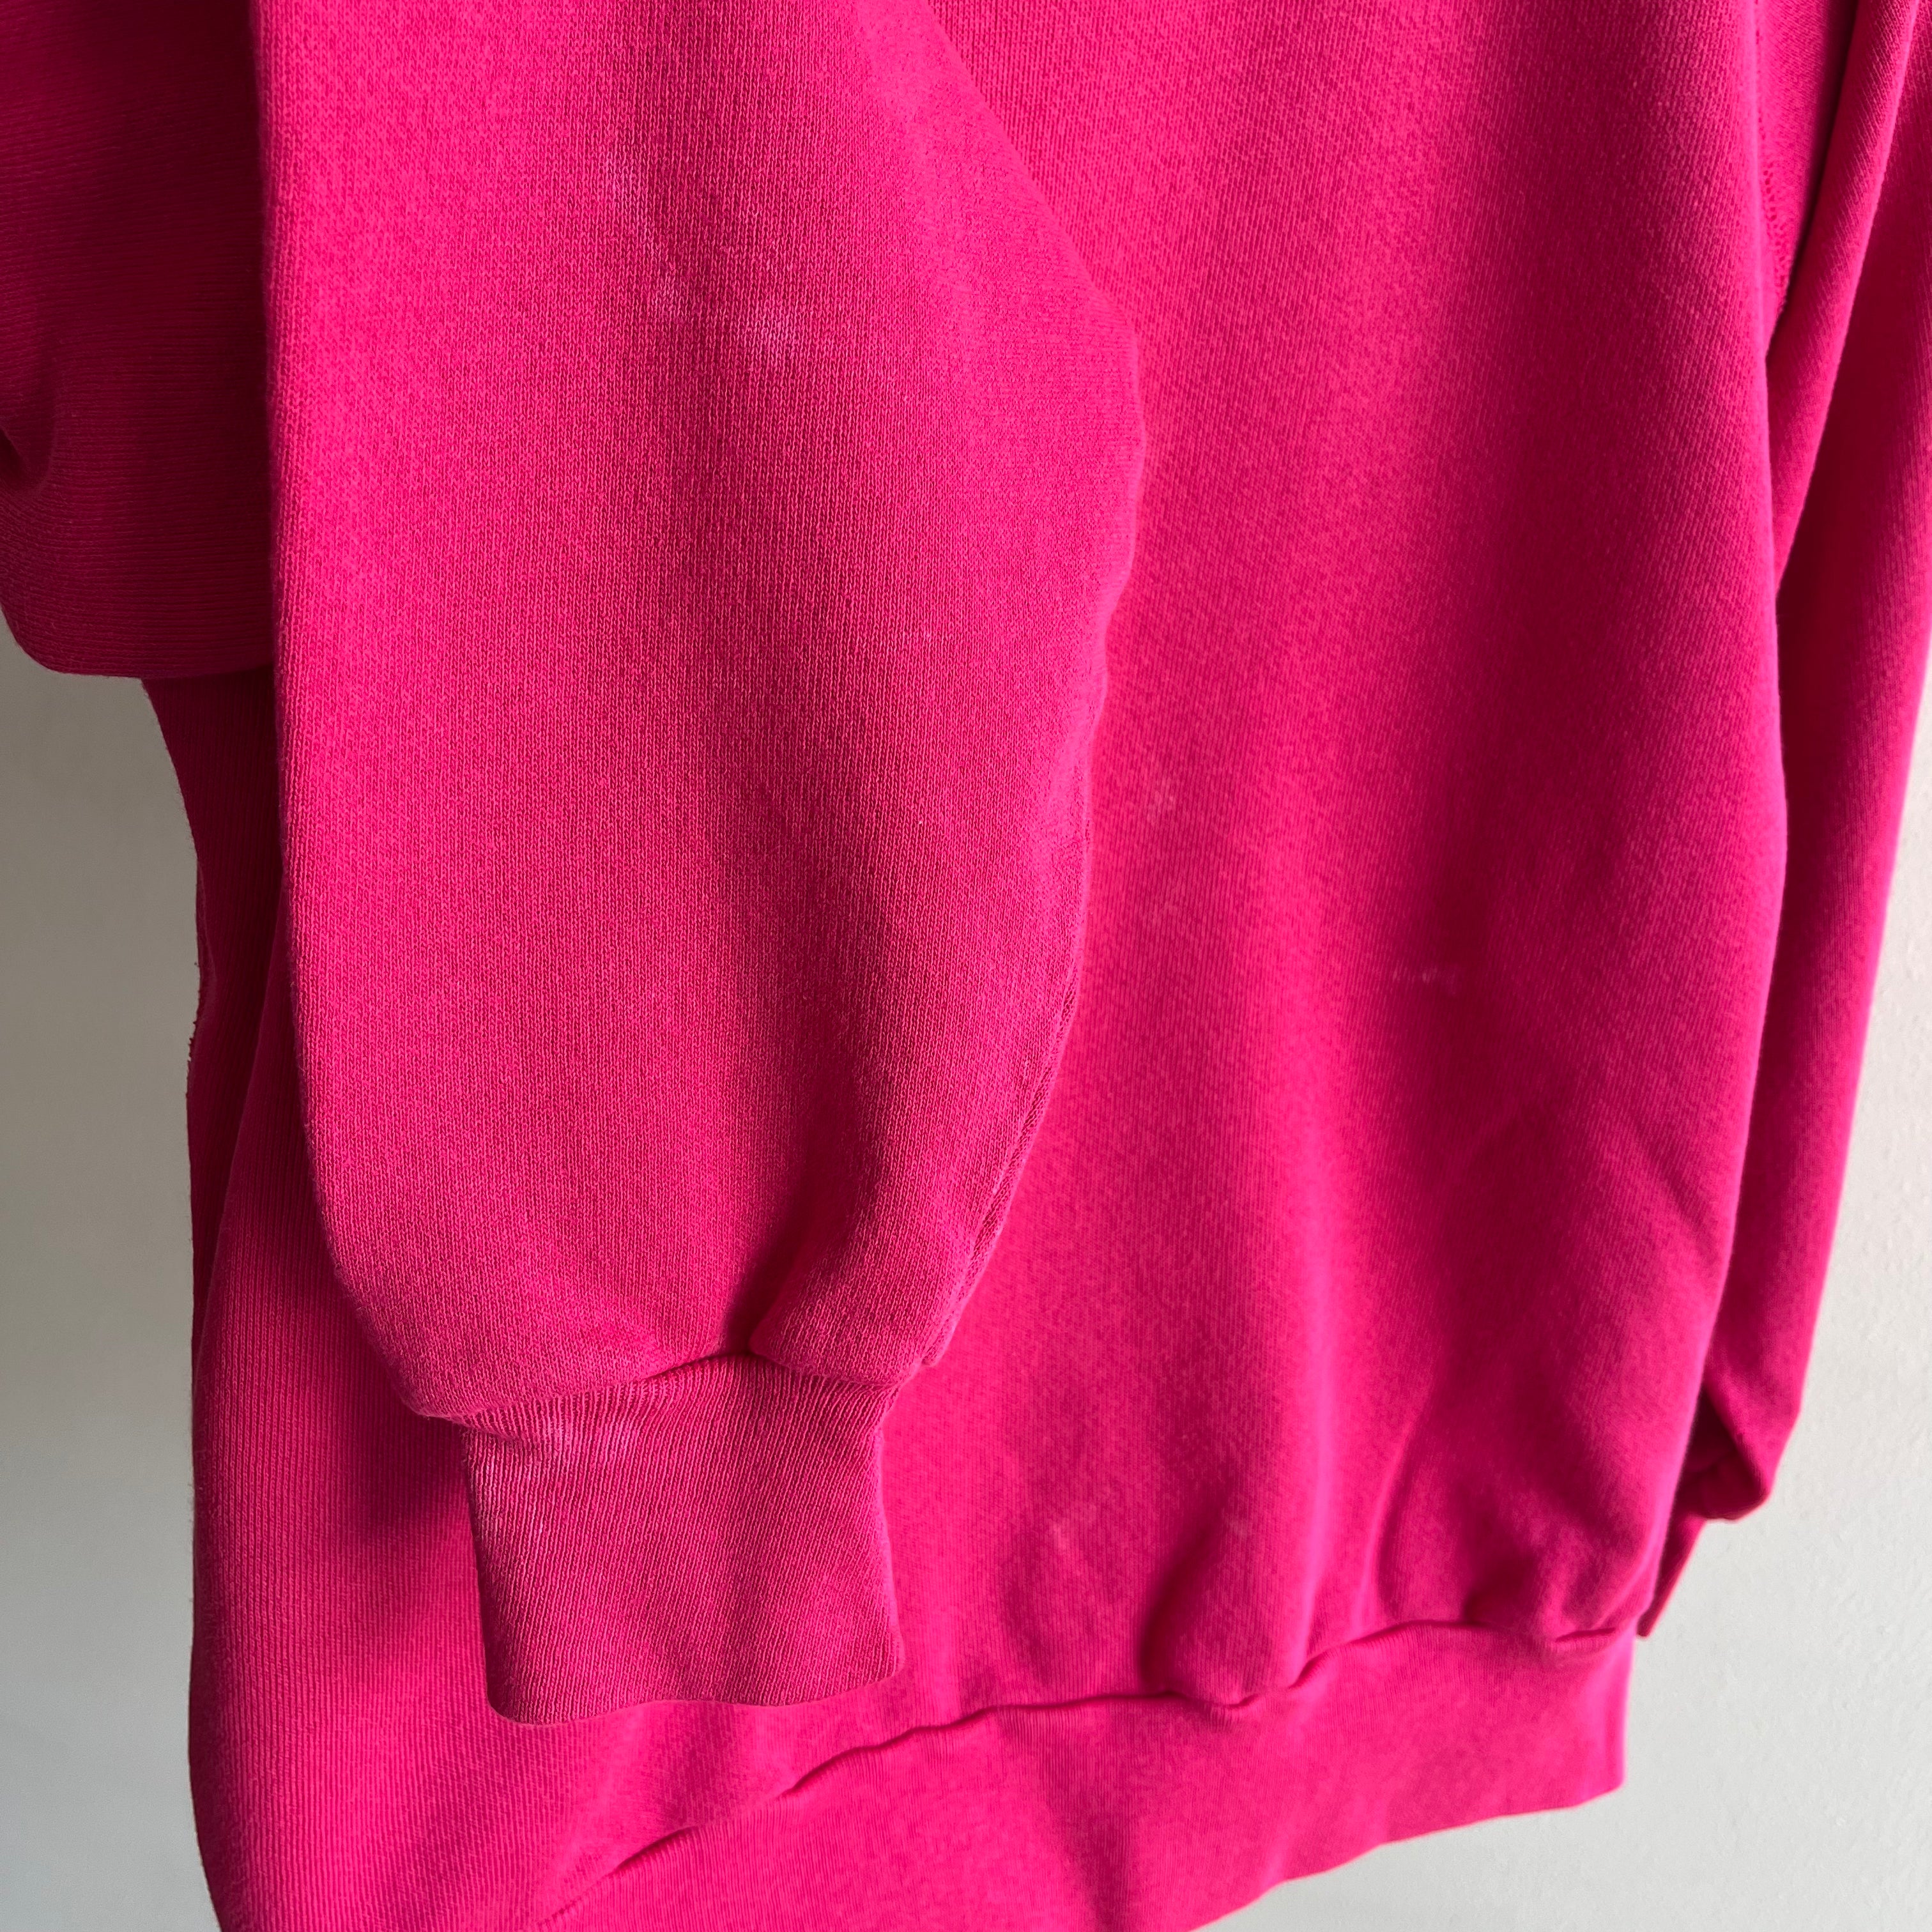 1980s Magenta Pink Sweatshirt with Bleach Staining